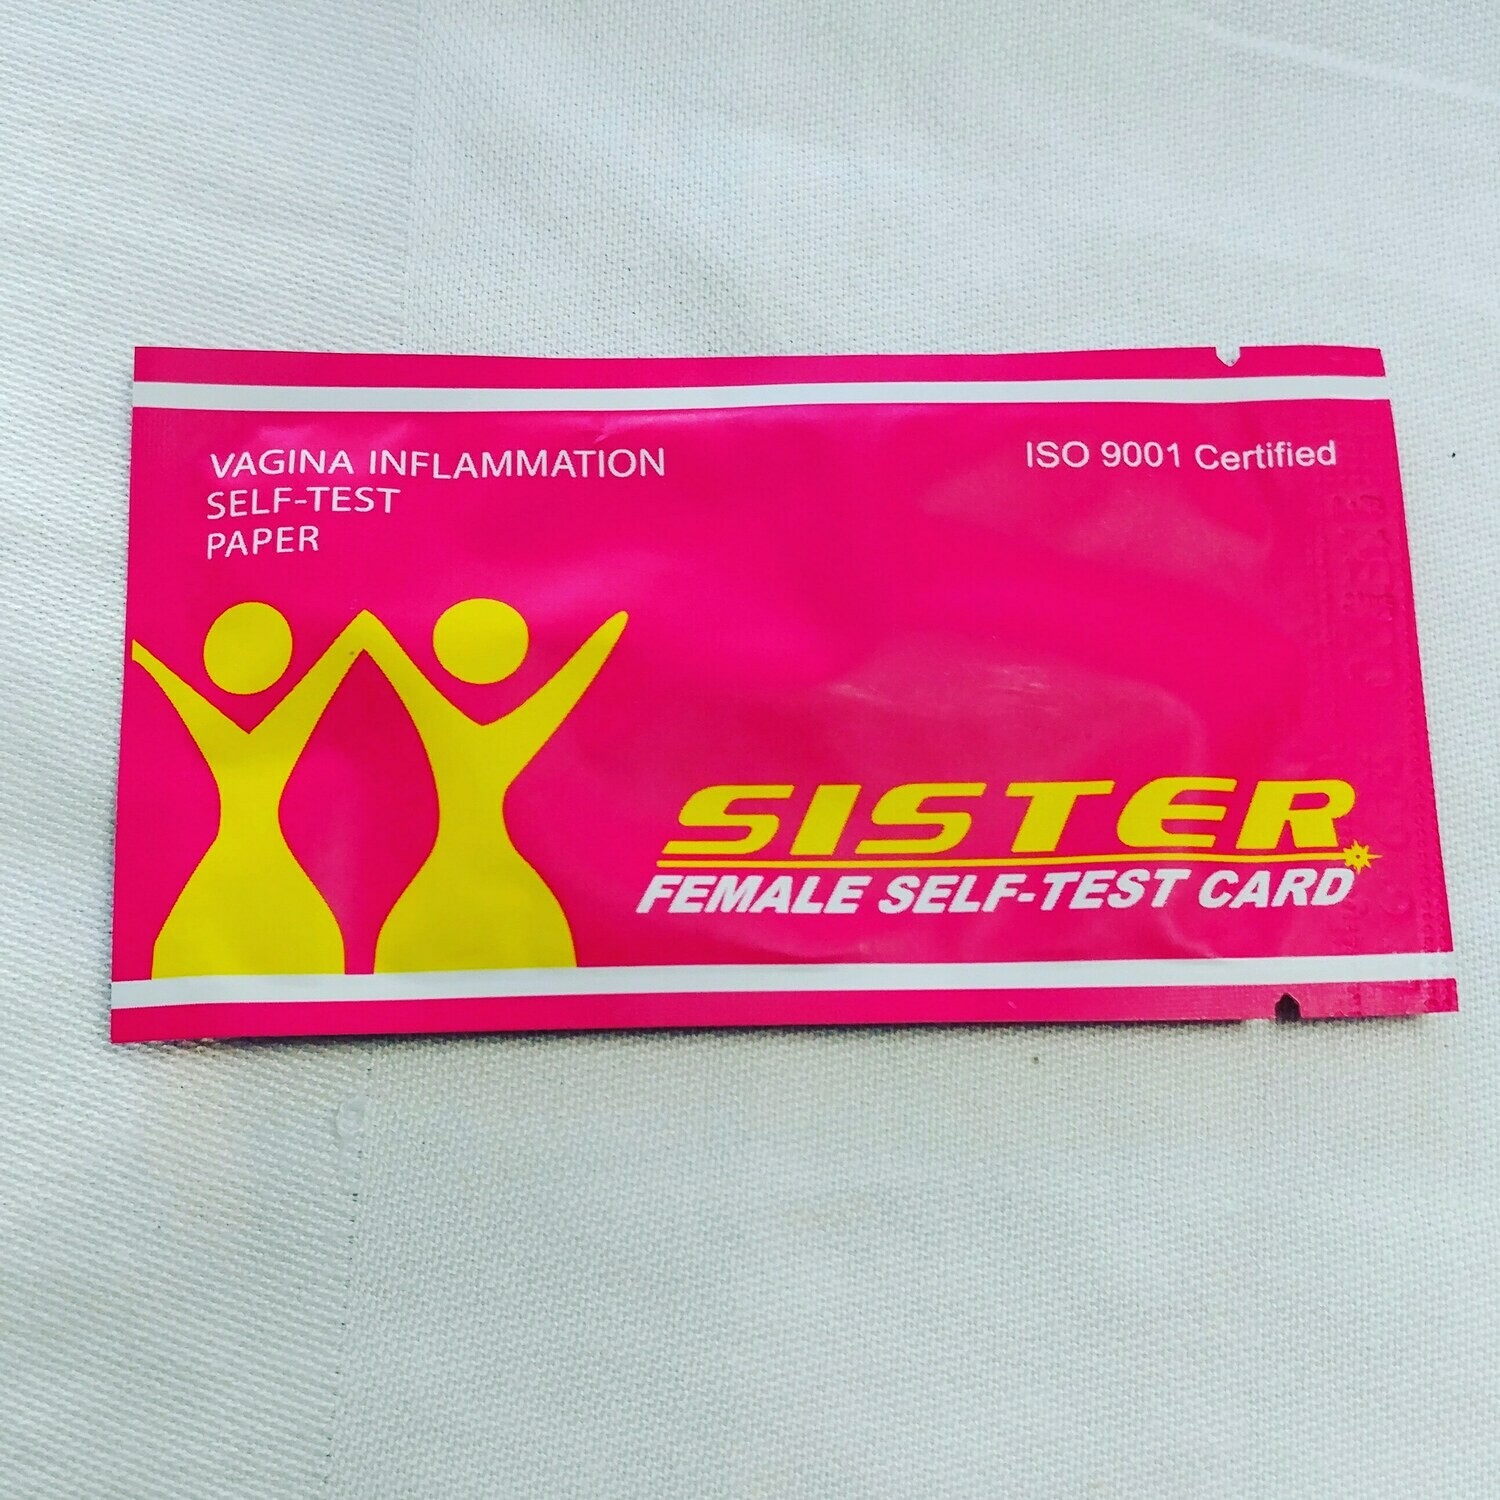 Vaginal Inflammation Test Card